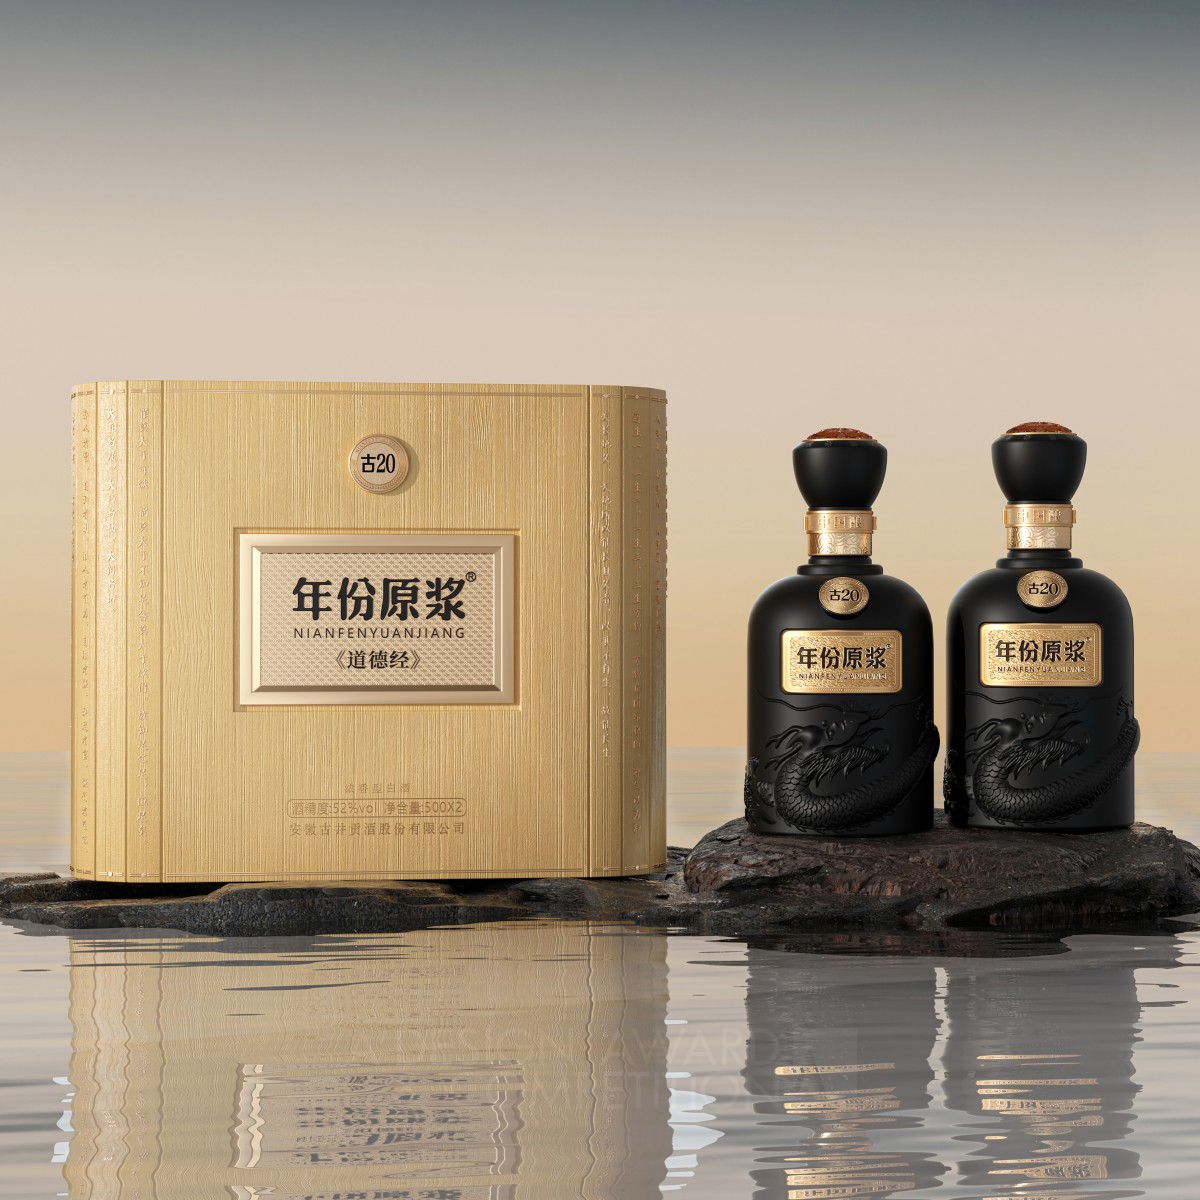 Dai Longfeng wins Bronze at the prestigious A' Packaging Design Award with Nianfenyuanjiang Liquor Packaging.